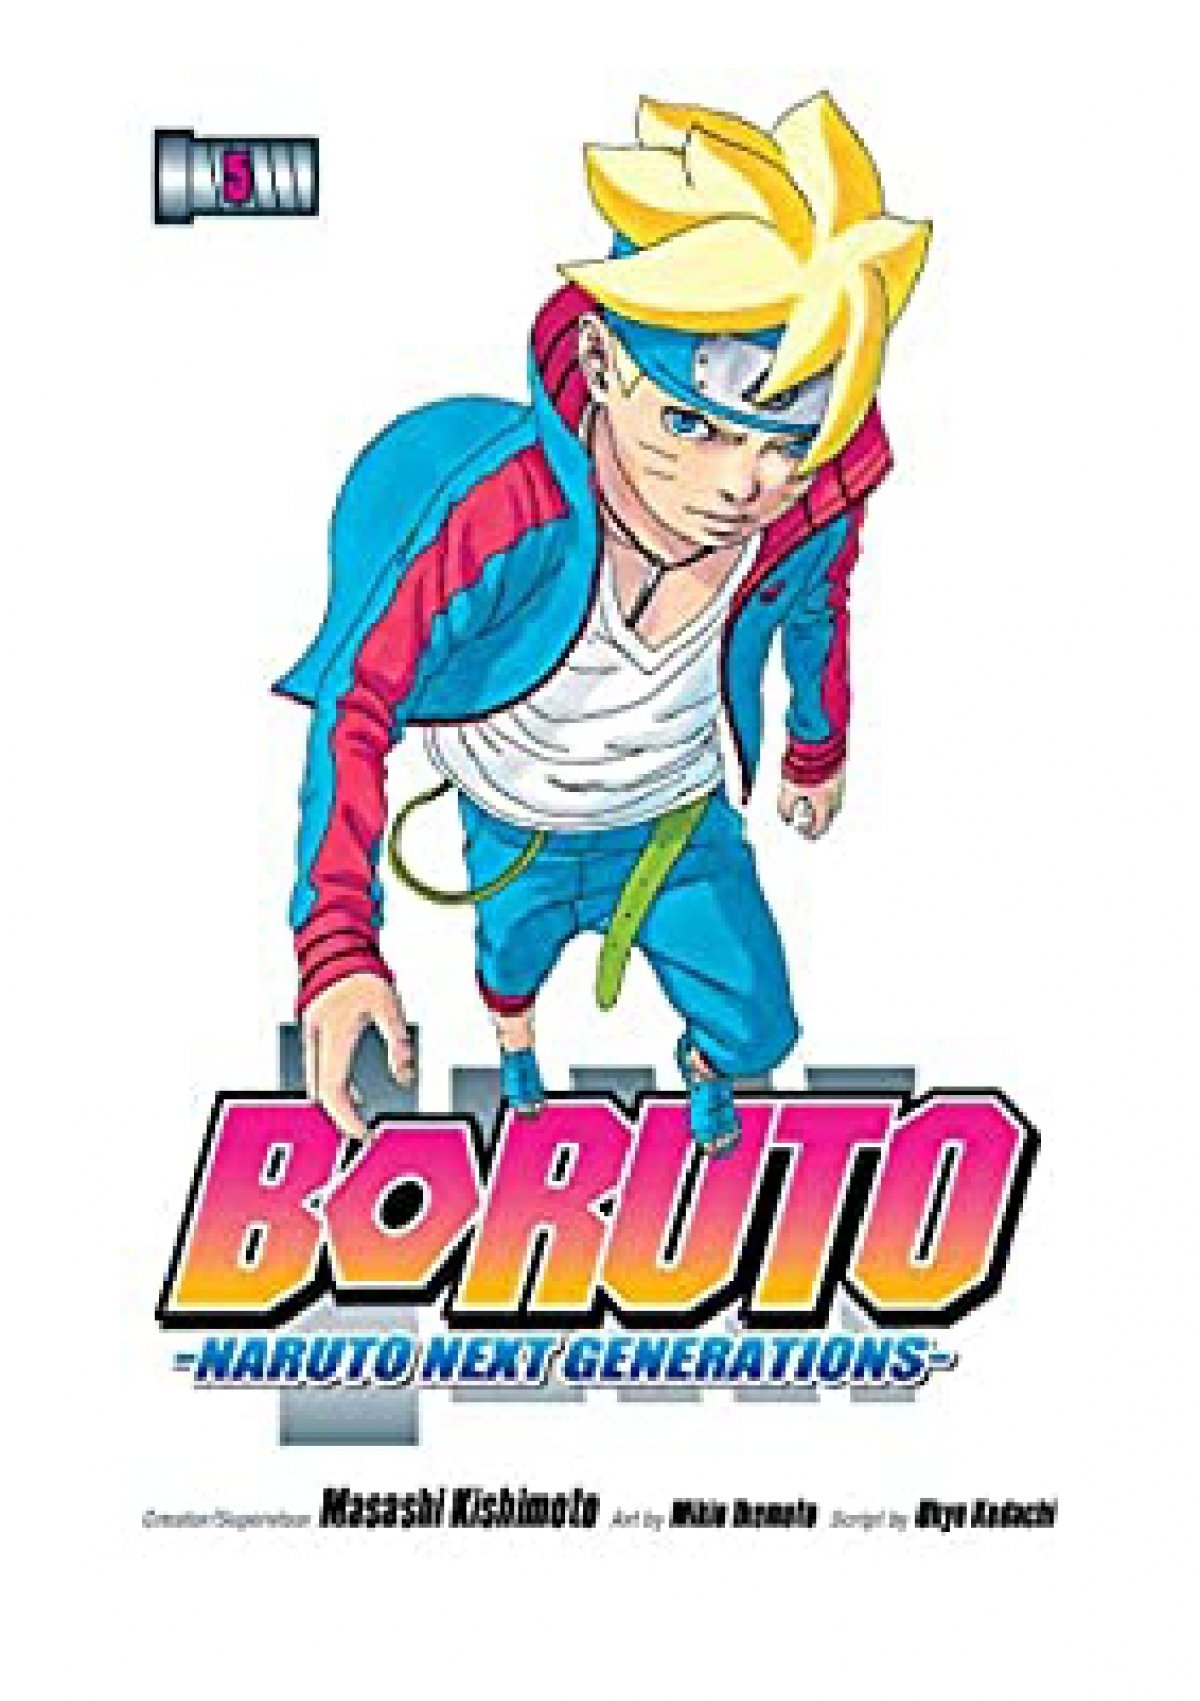 Pdf Boruto Vol 5 Naruto Next Generations 5 Boruto Naruto Next Generations Download Pdf